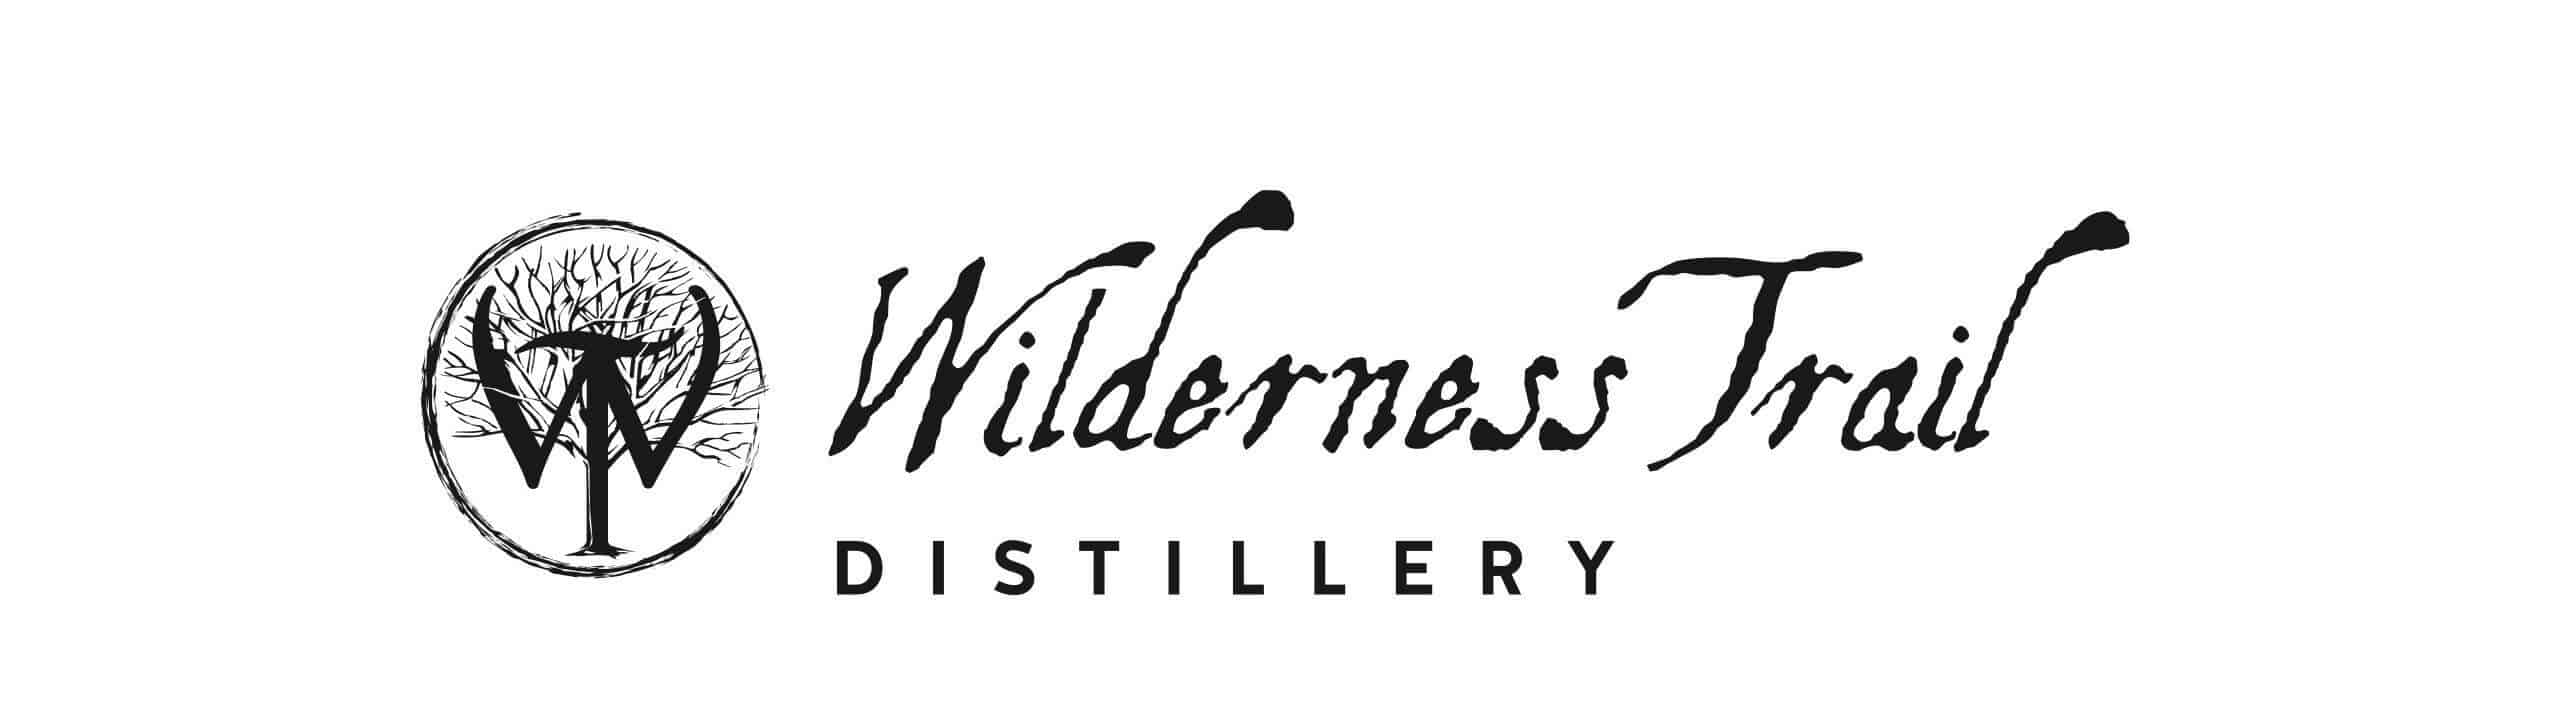 Wilderness Trail Logo NEW - Wilderness Trail Distillery Charity Chili Cook Off  Benefits Children and Senior Citizens